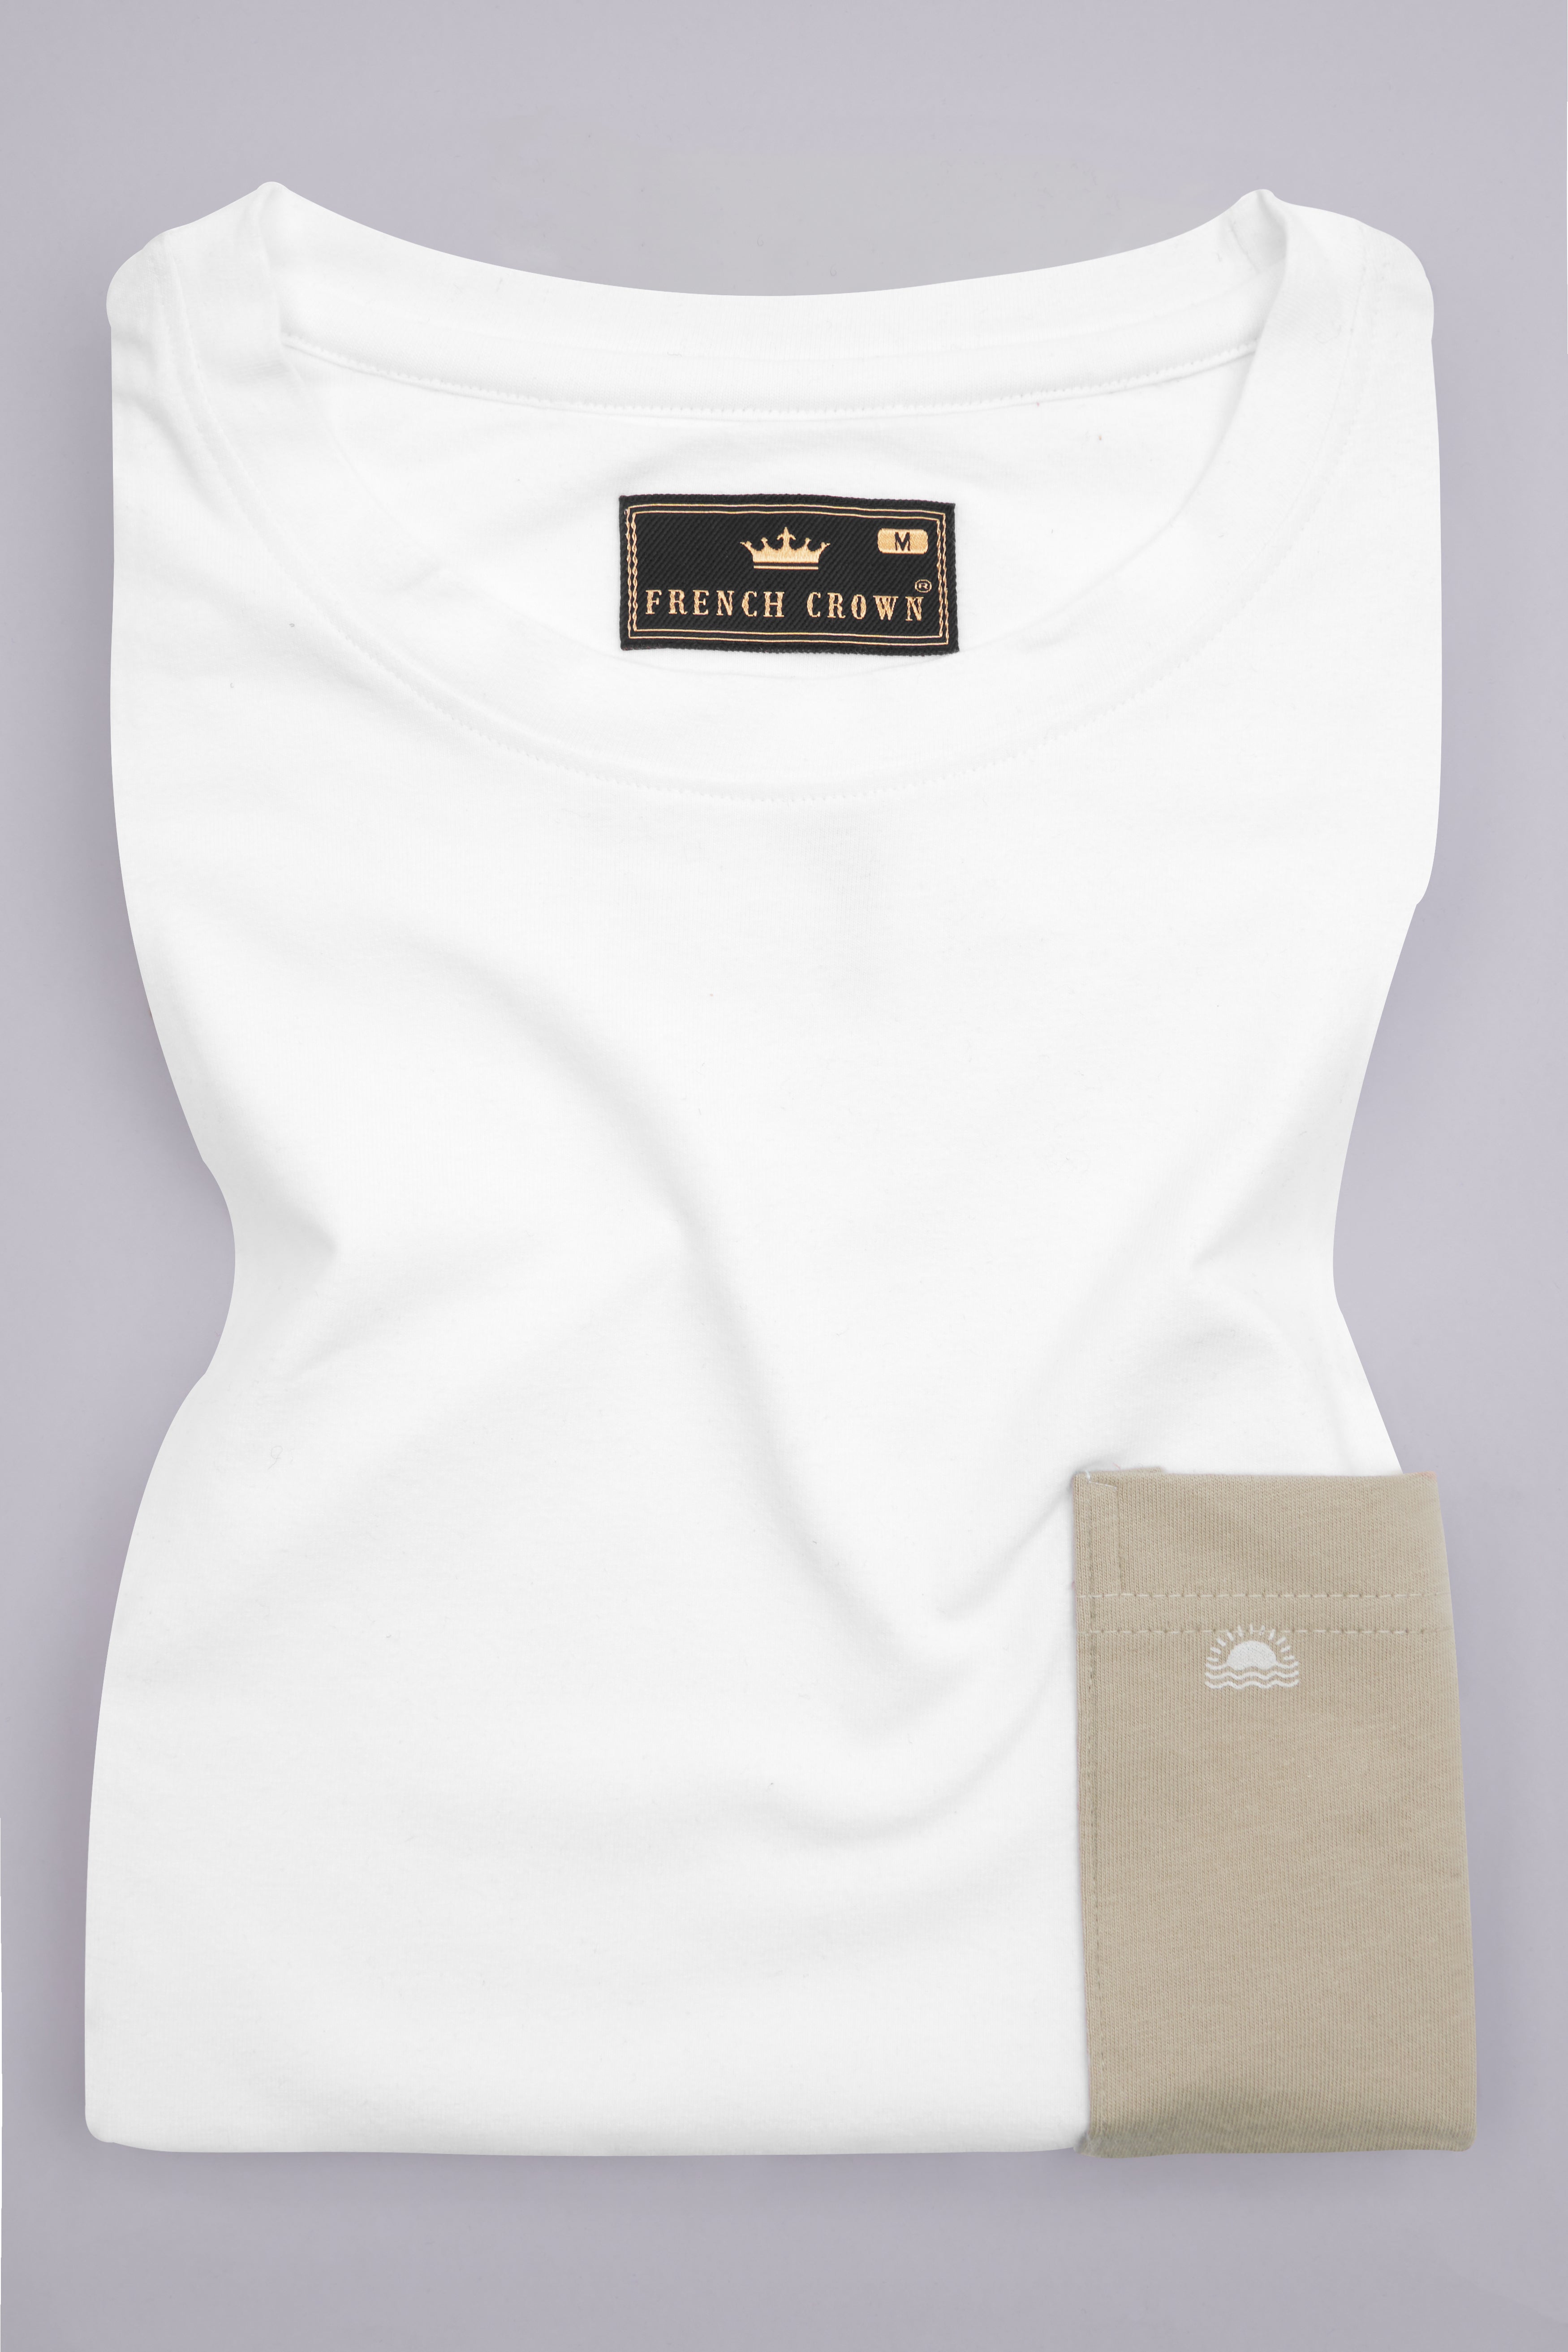 Bright White and Hilary Brown Premium Cotton Jersey T-Shirt TS913-S, TS913-M, TS913-L, TS913-XL, TS913-XXL